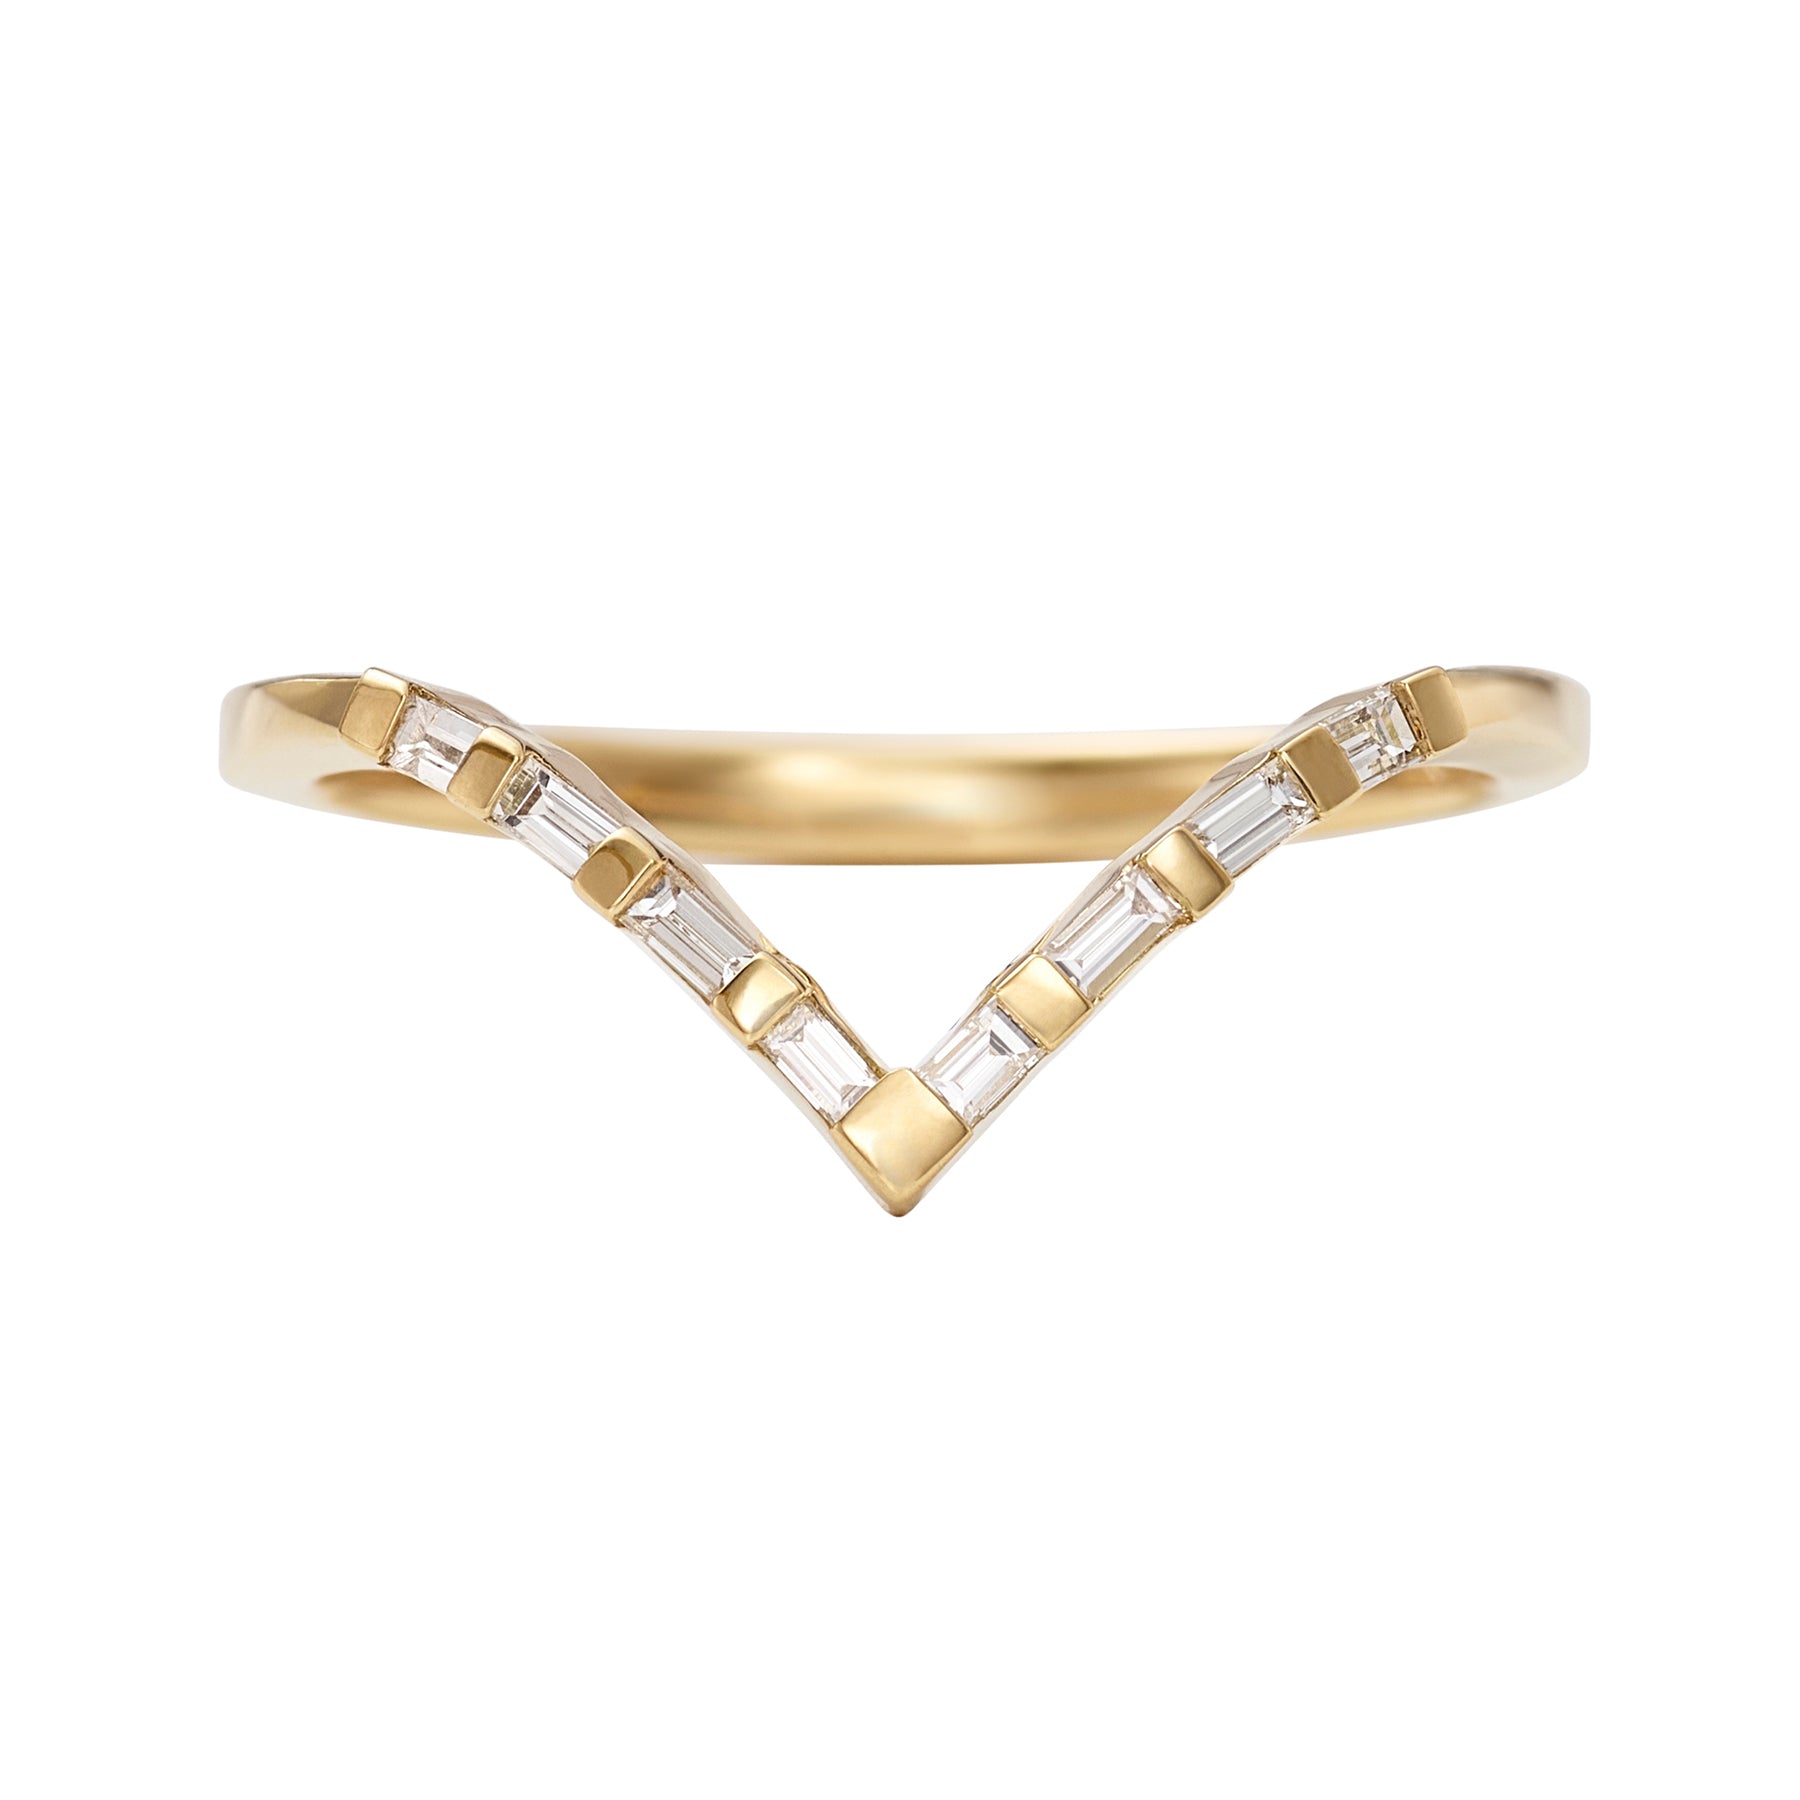 Buy Baal Finger Ring Bracelet for Bridal for Wedding Party Golden Pack of 1  at Amazon.in